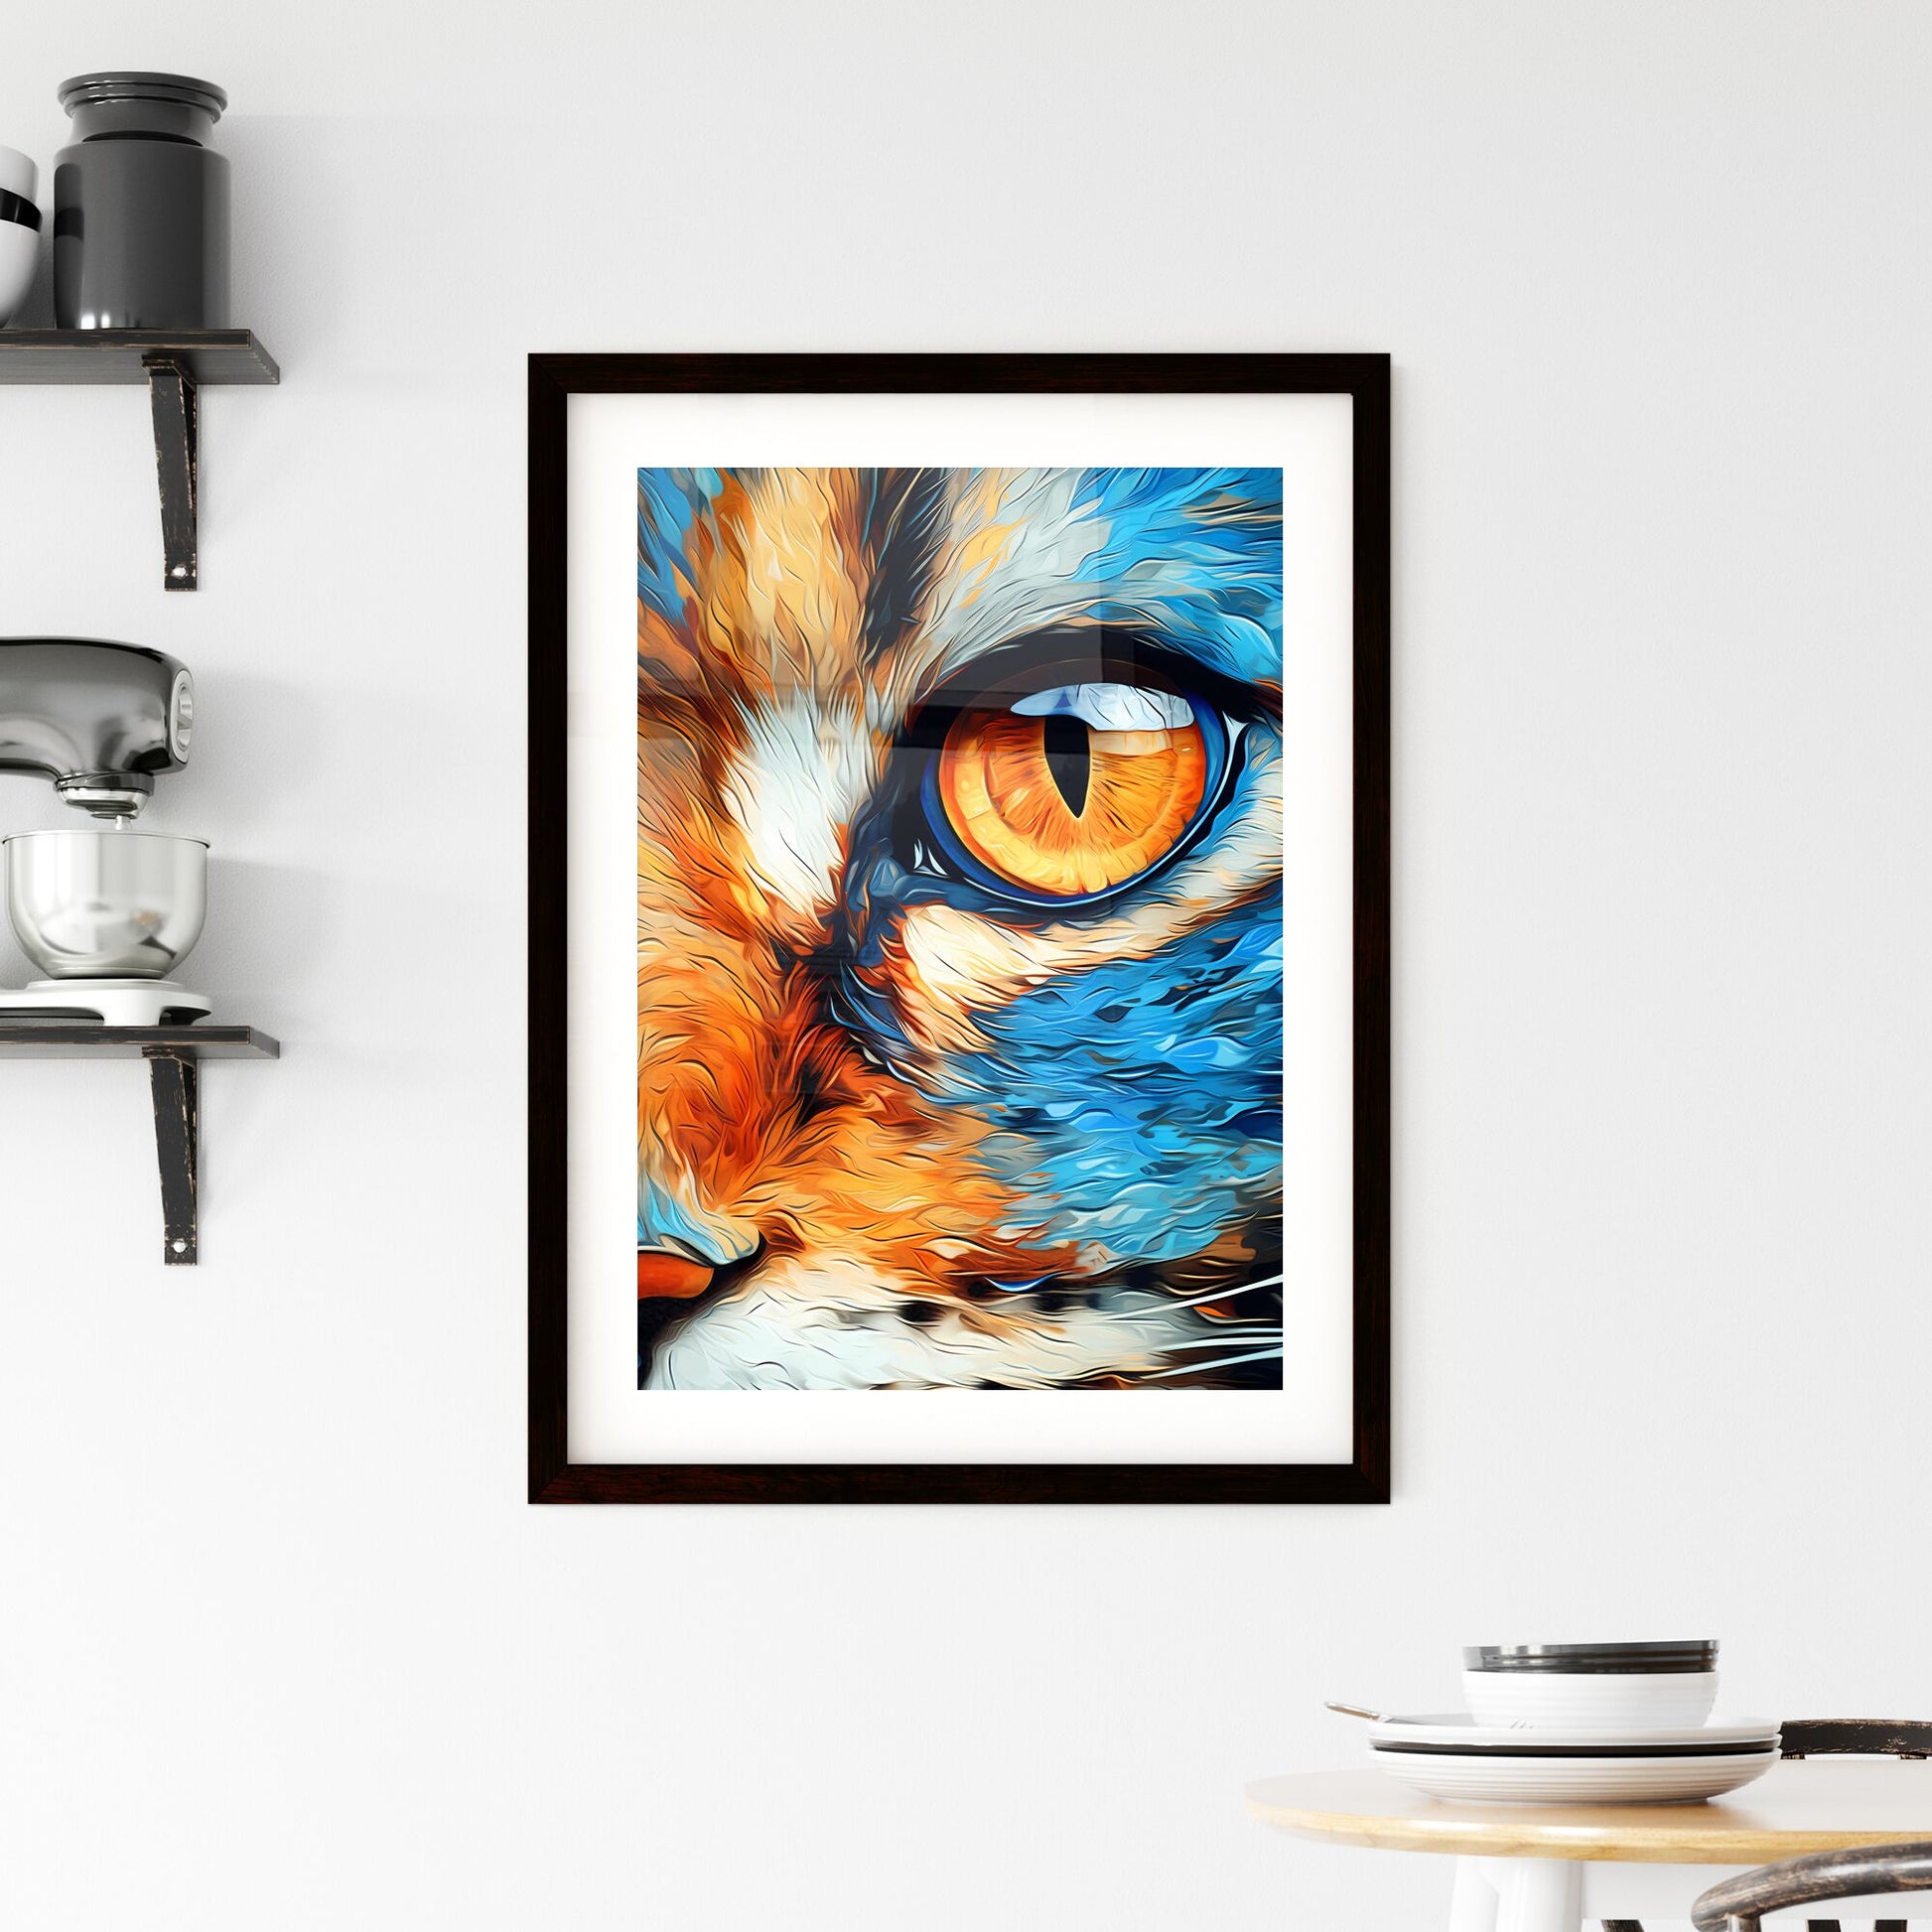 A Poster of A cat with one eye - A Close Up Of A Cat'S Eye Default Title